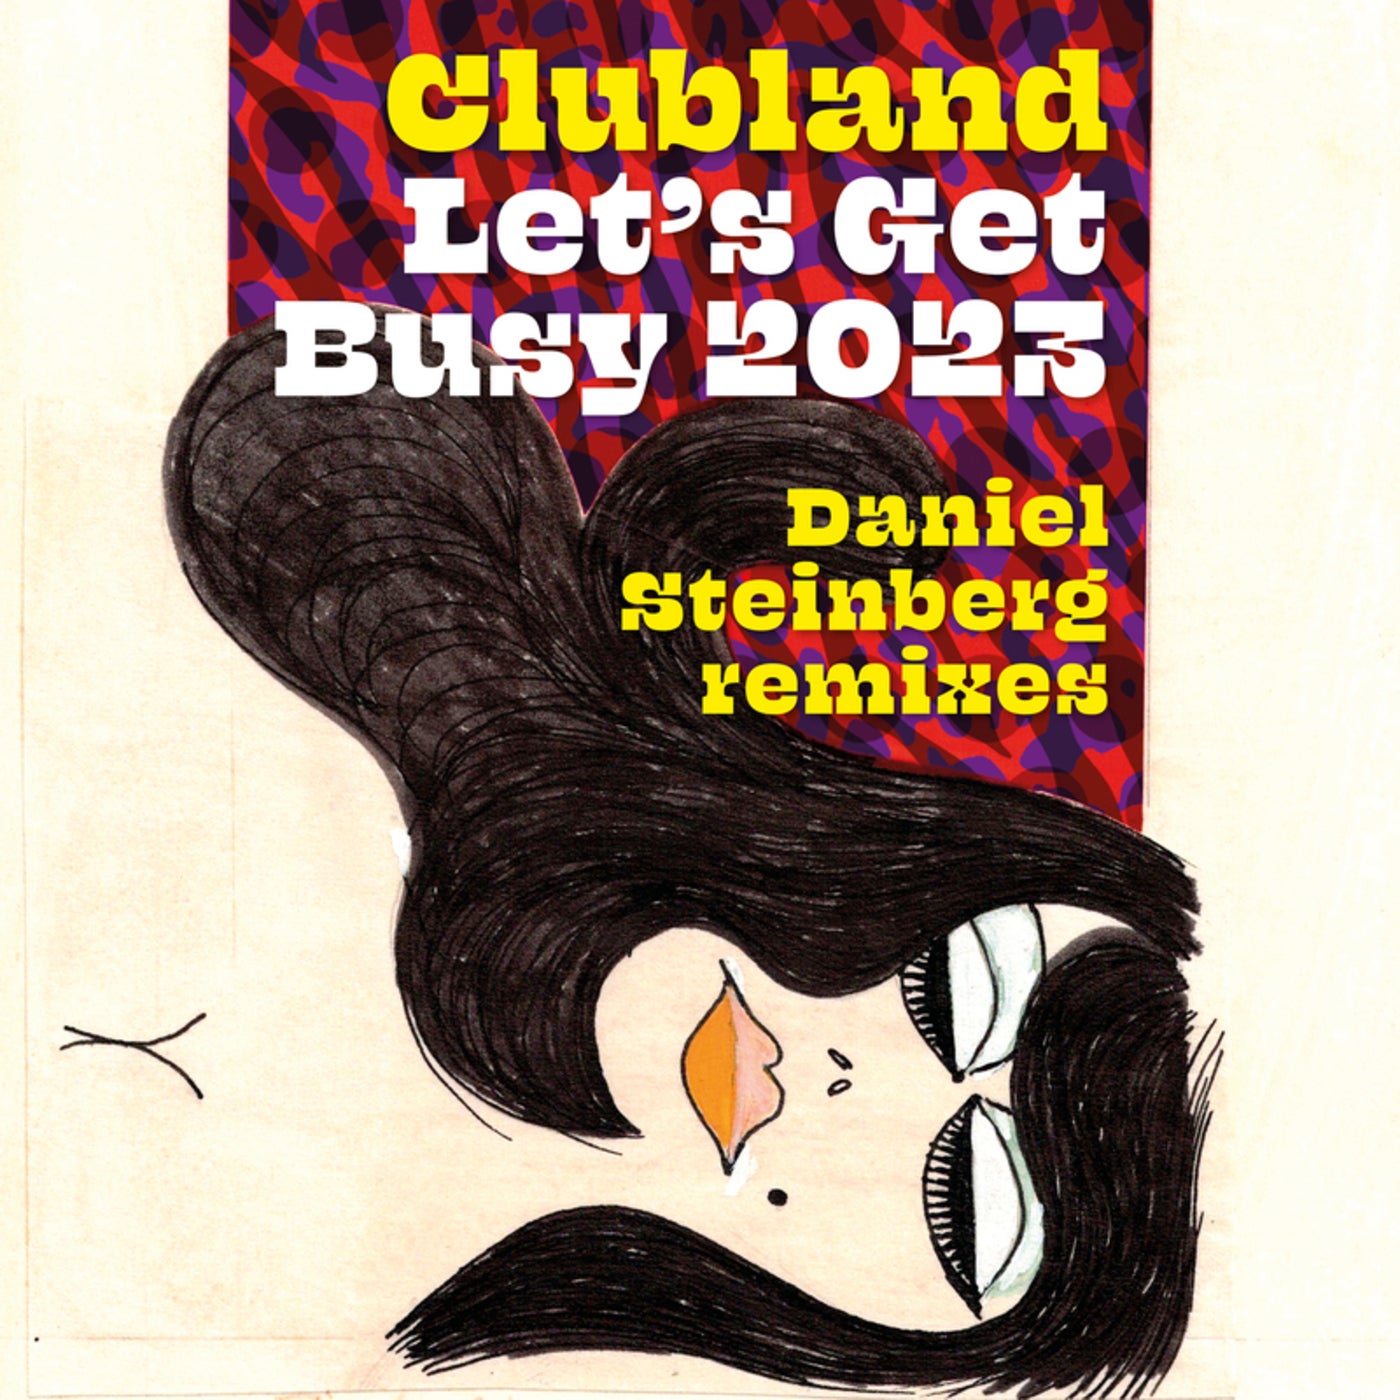 Let's Get Busy 2023 (Daniel Steinberg Remixes)